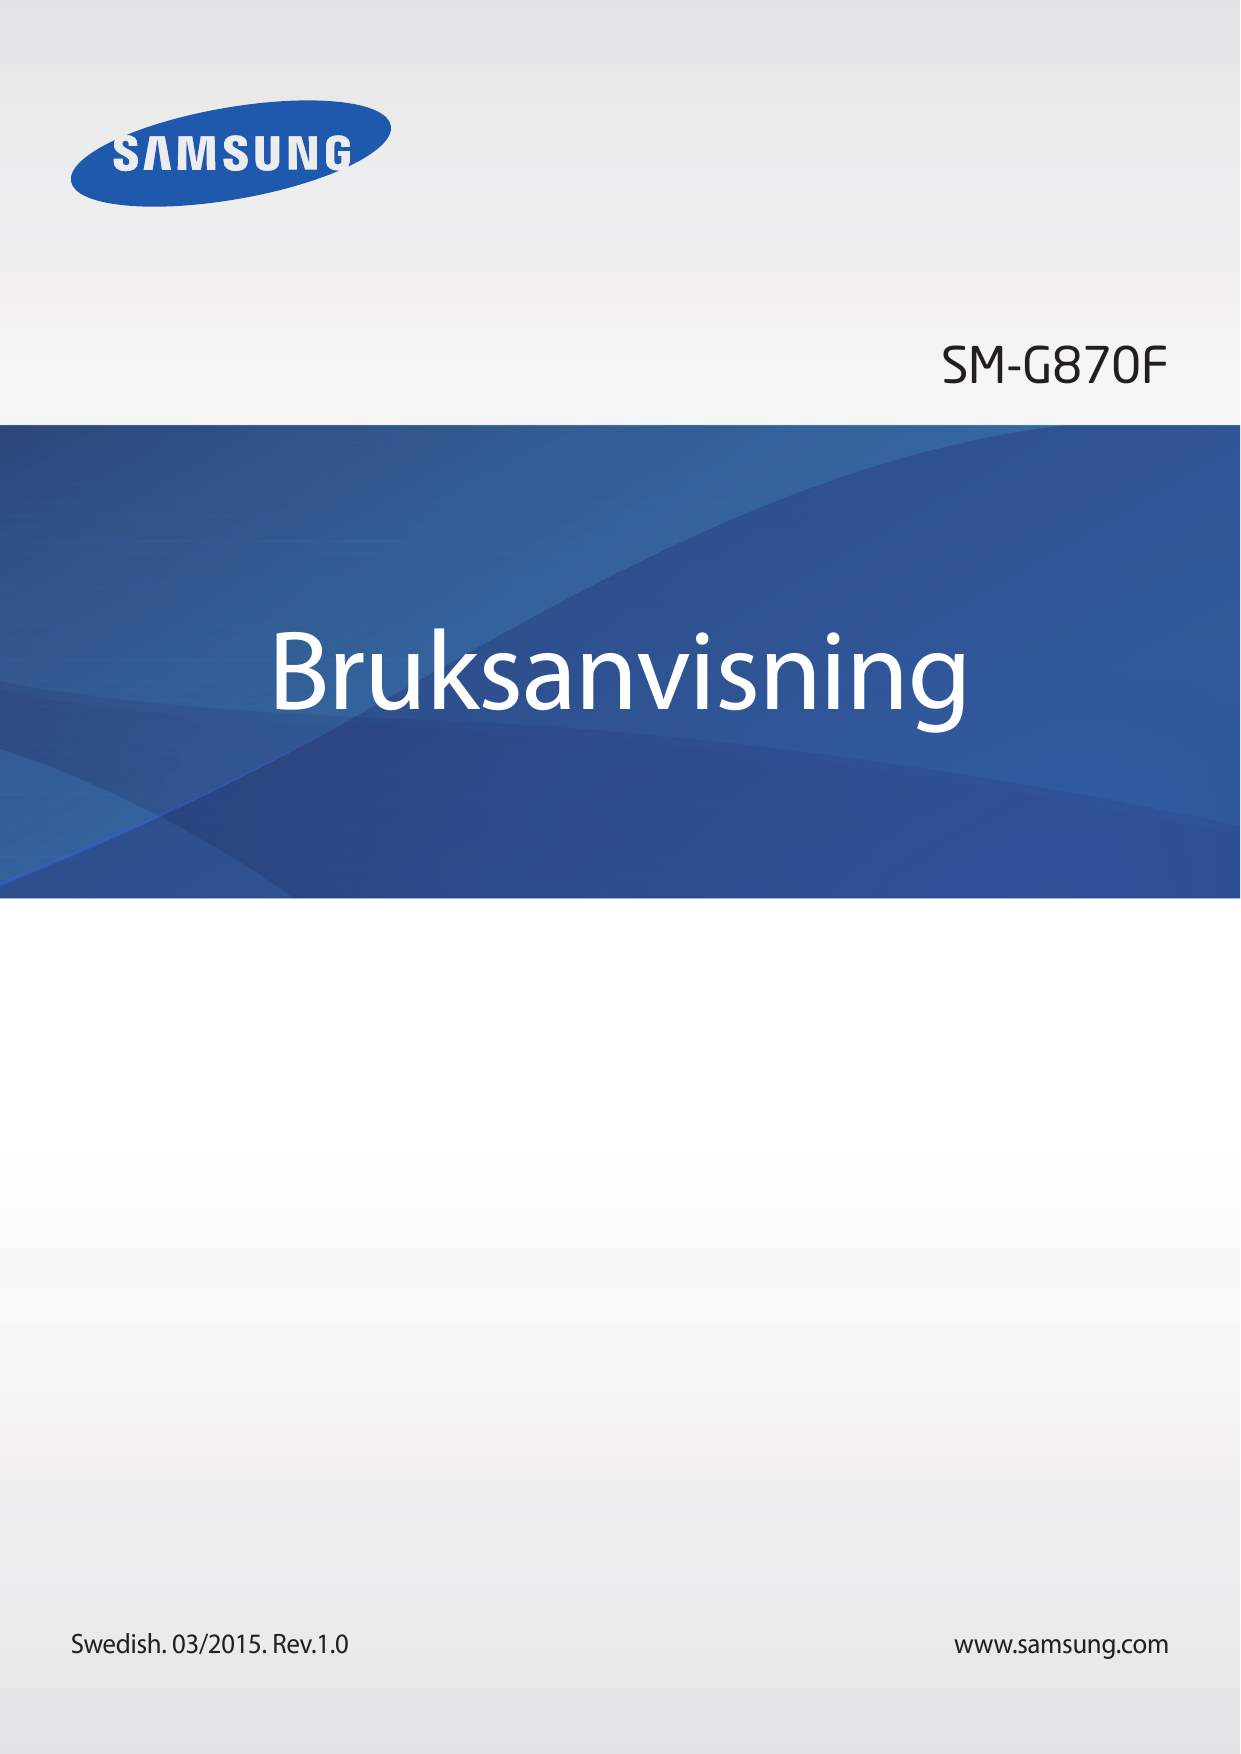 SM-G870FBruksanvisningSwedish. 03/2015. Rev.1.0www.samsung.com